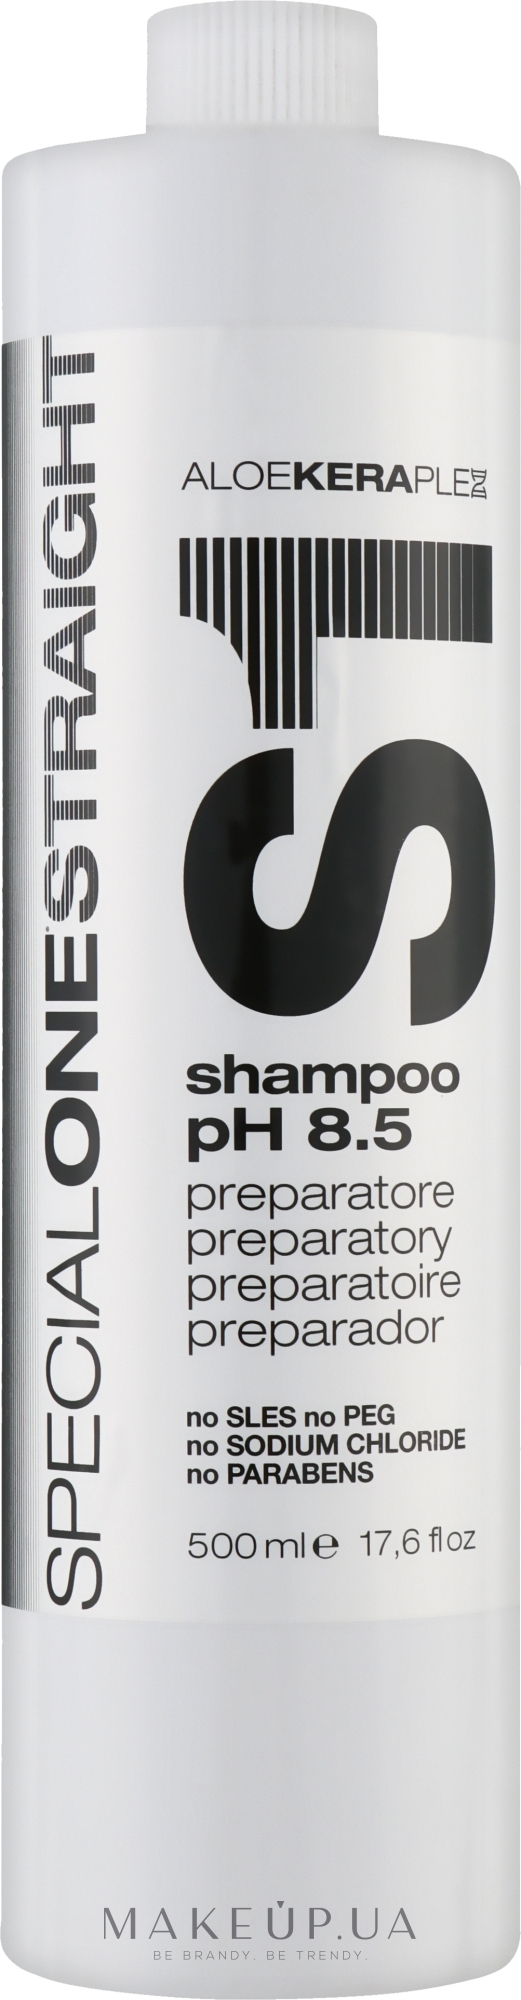 Подготовительный щелочной шампунь - Trendy Hair Preparatory Shampoo S1 Ph 8.5 — фото 500ml